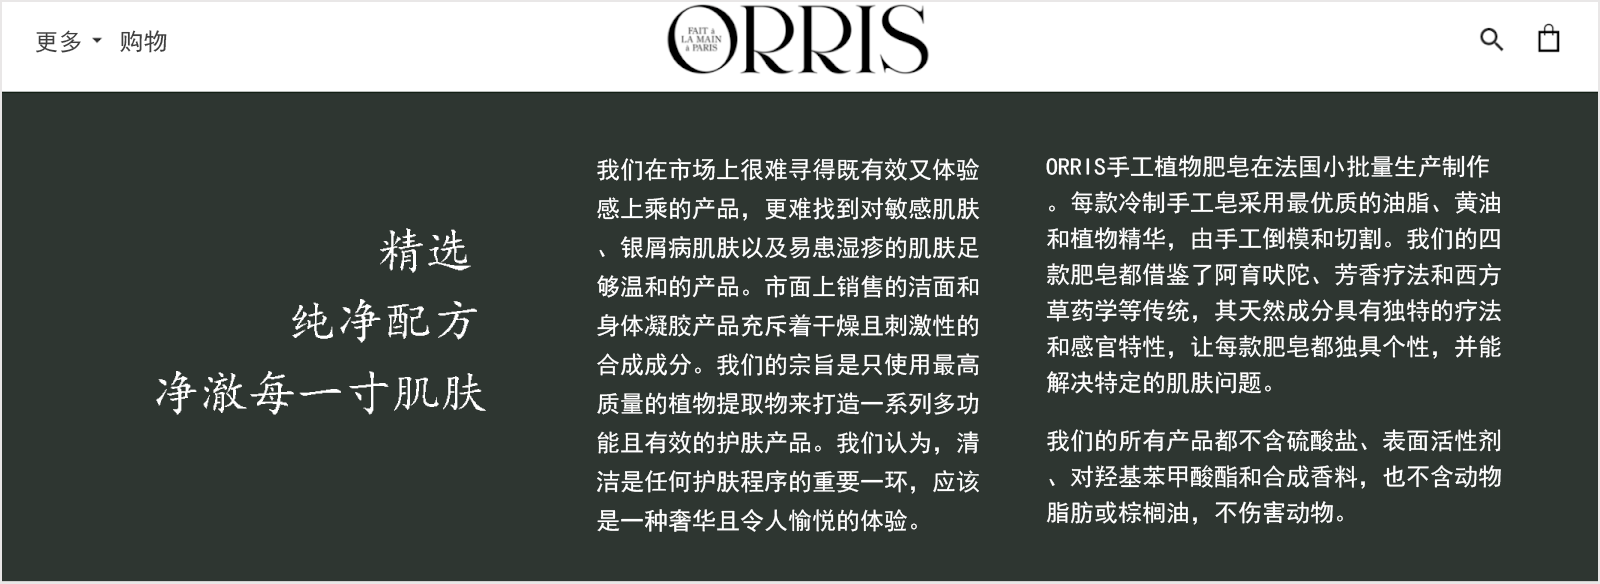 ORRIS网站首页